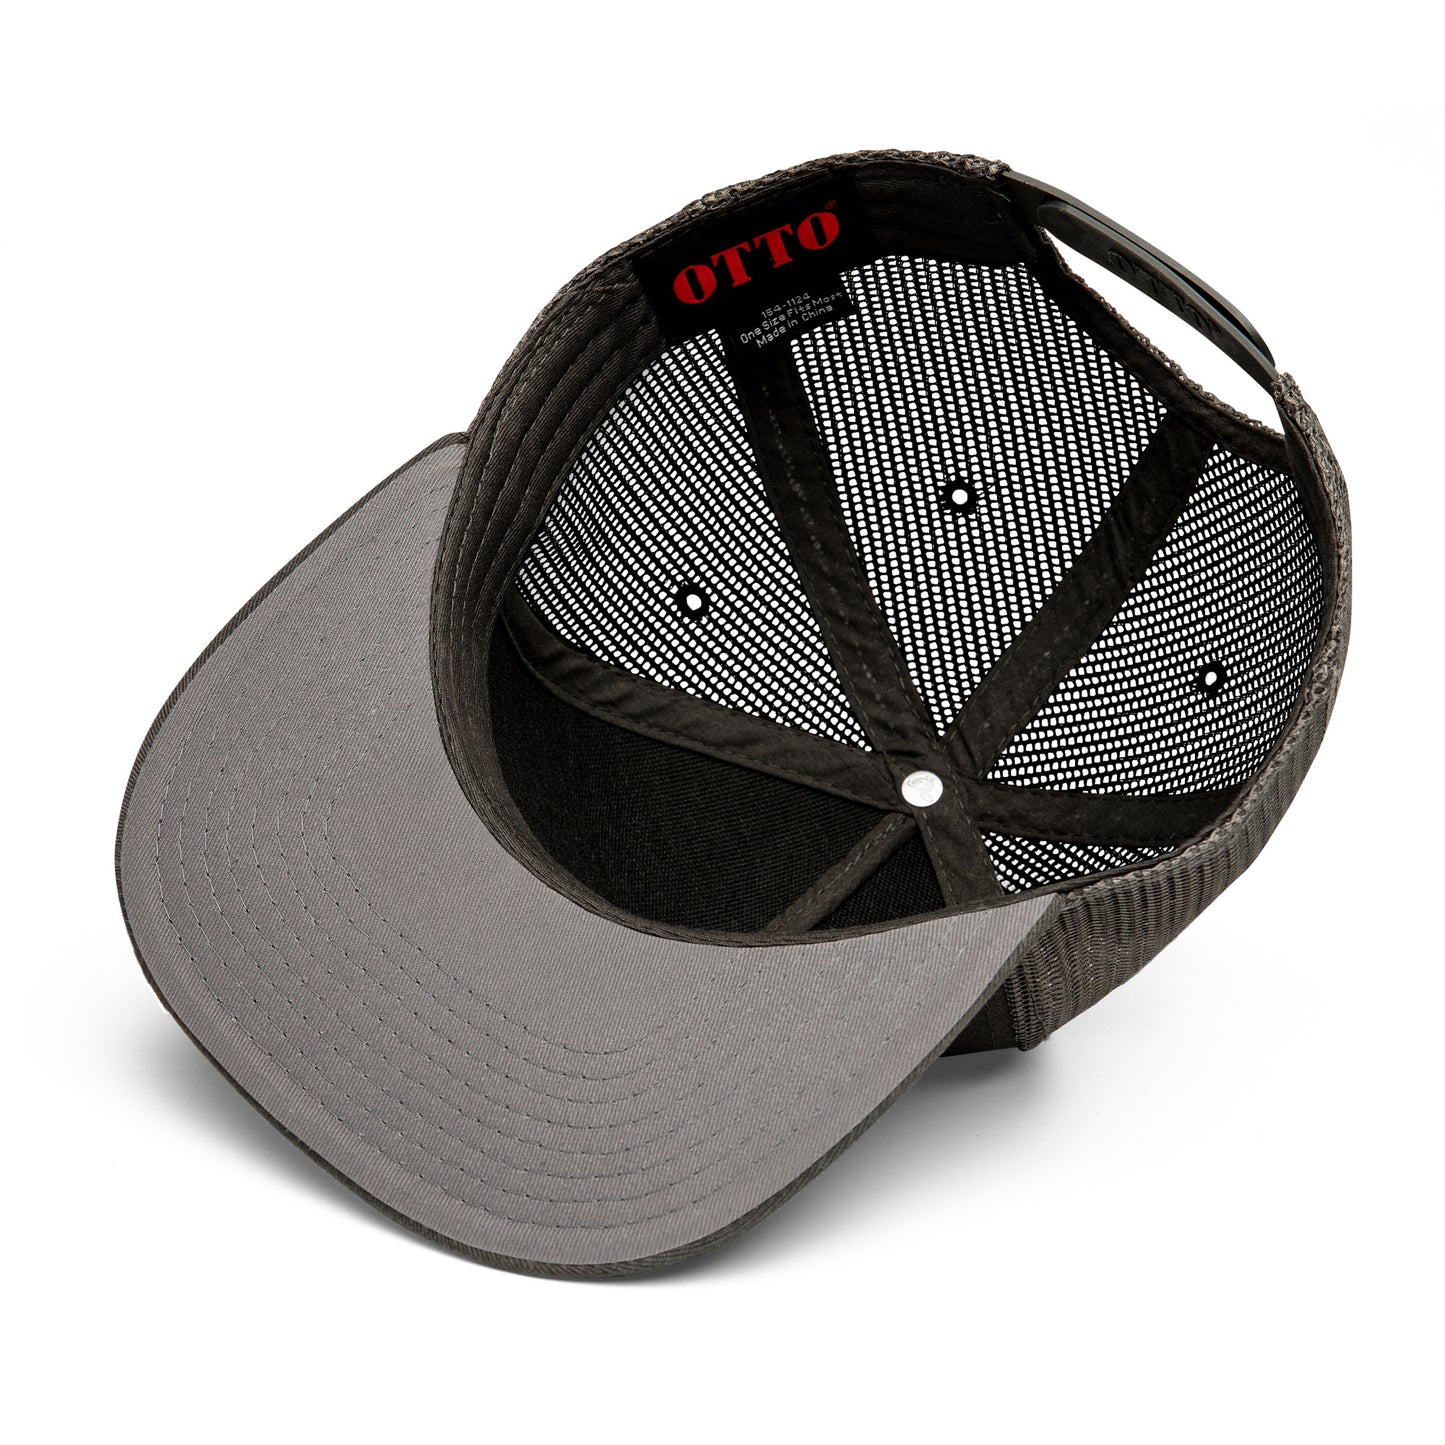 NTS Mesh Back Snapback Hat